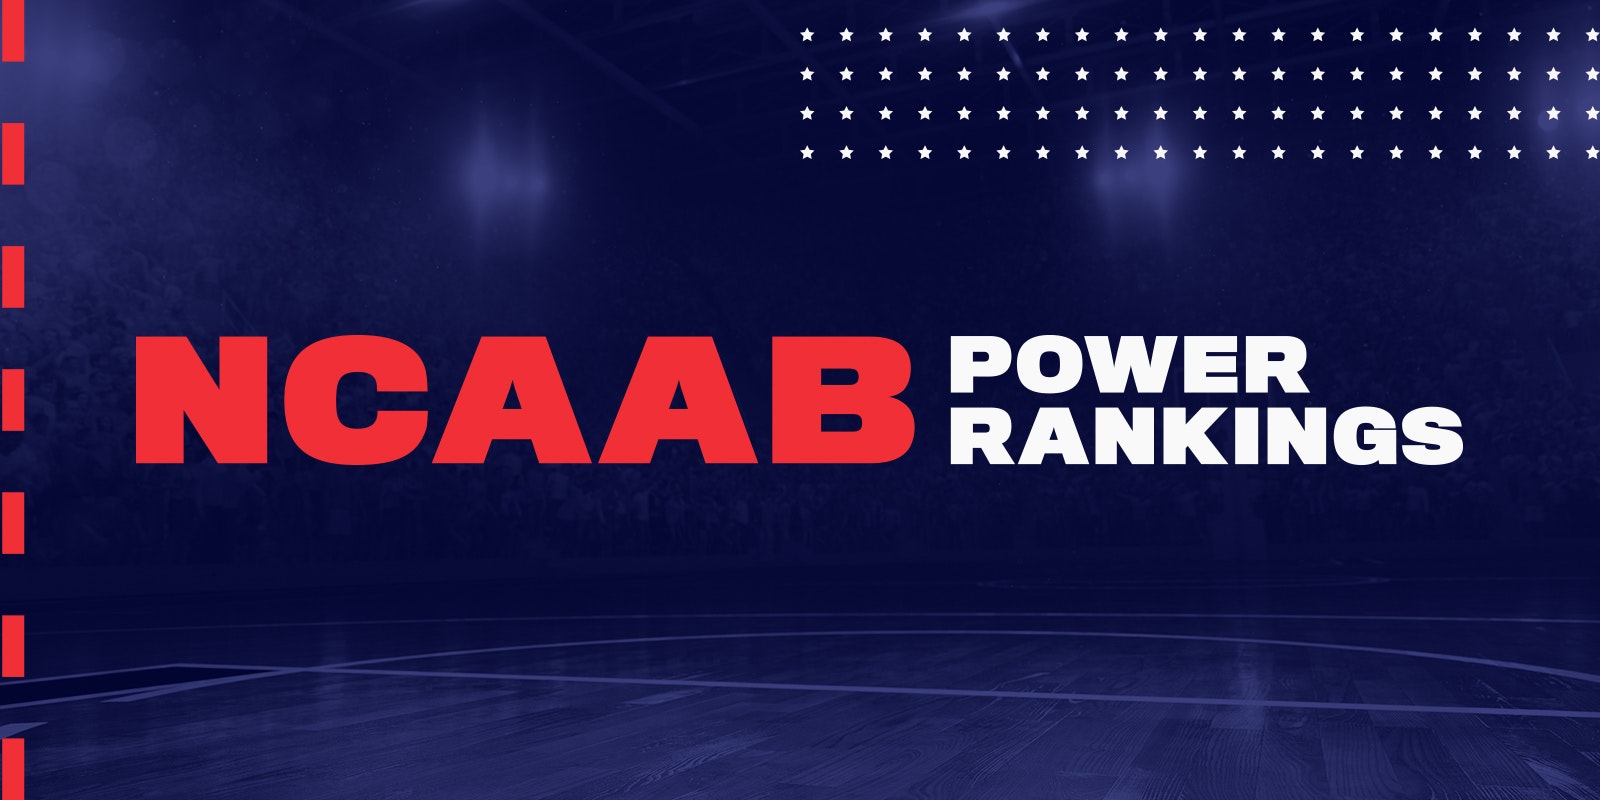 NCAAB Power Rankings The TwinSpires Edge